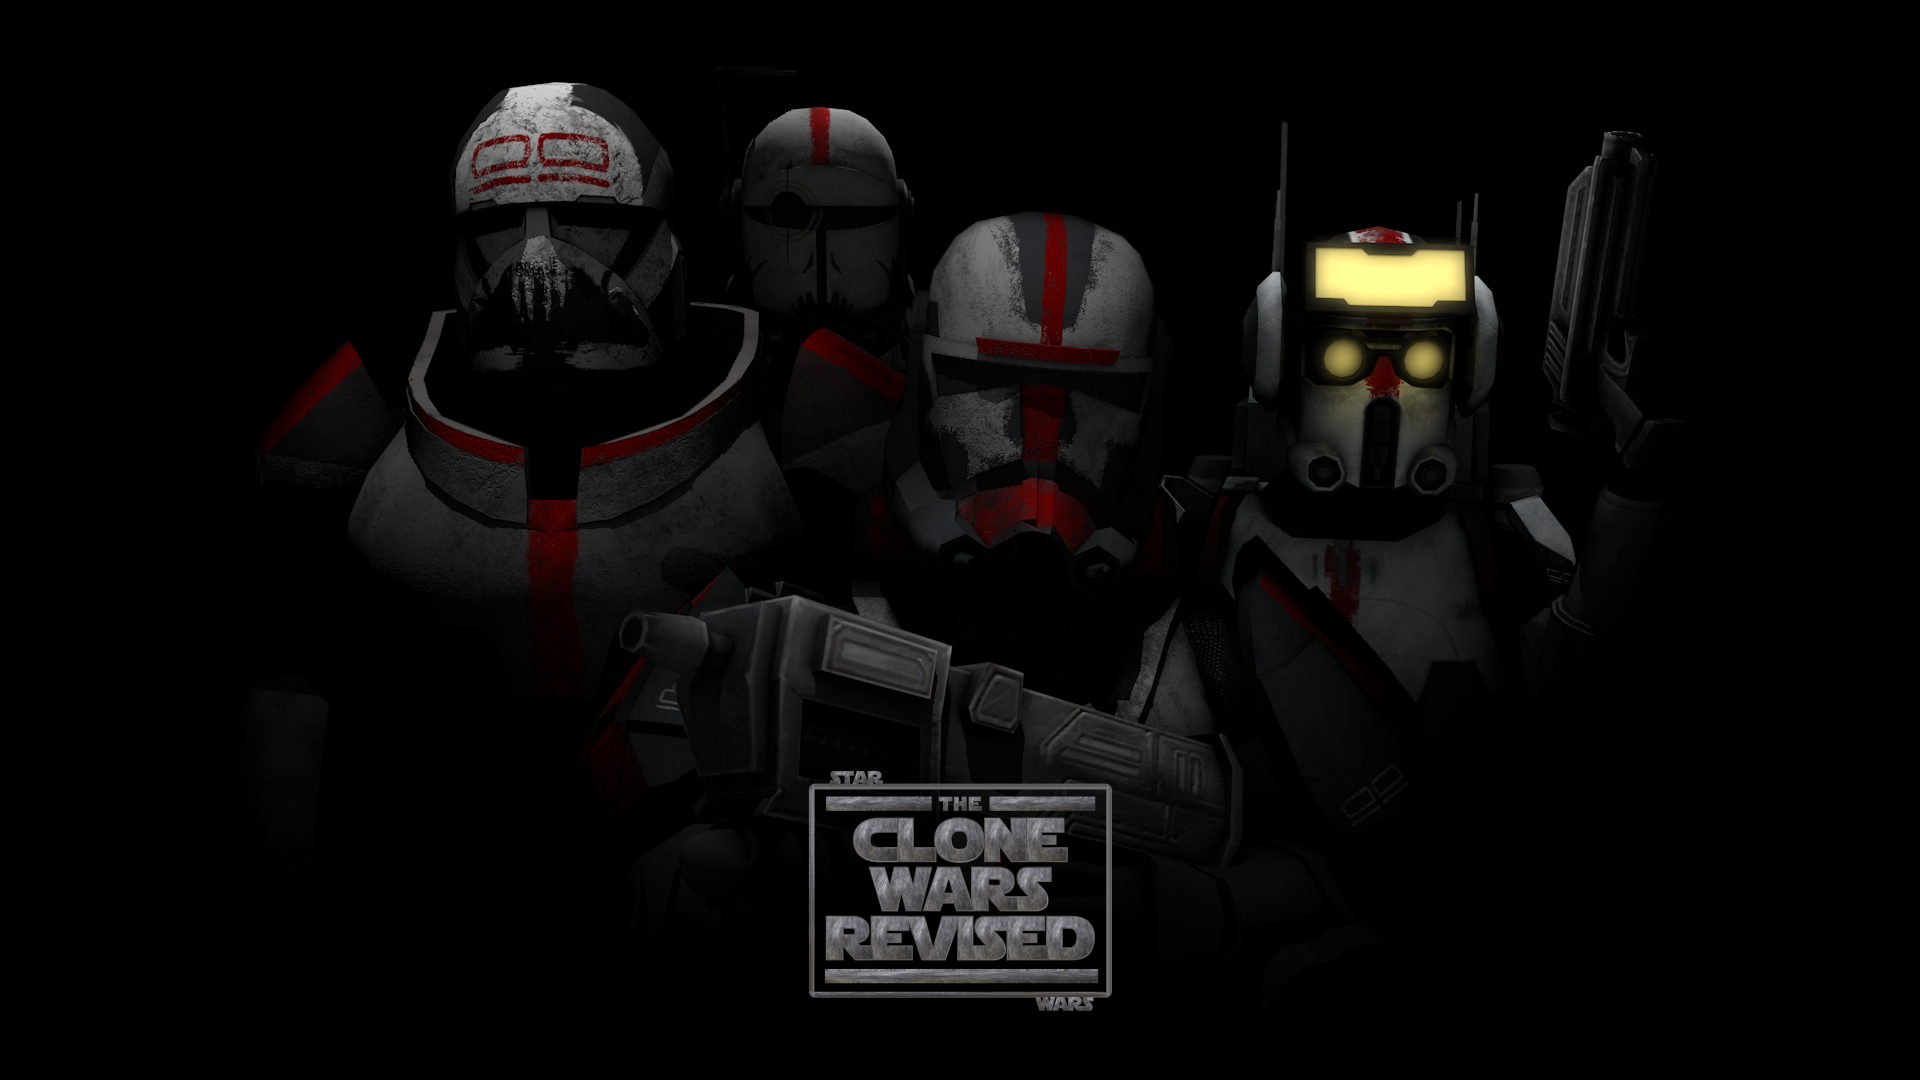 The Bad Batch news Clone Wars Revised mod for Star Wars Battlefront II